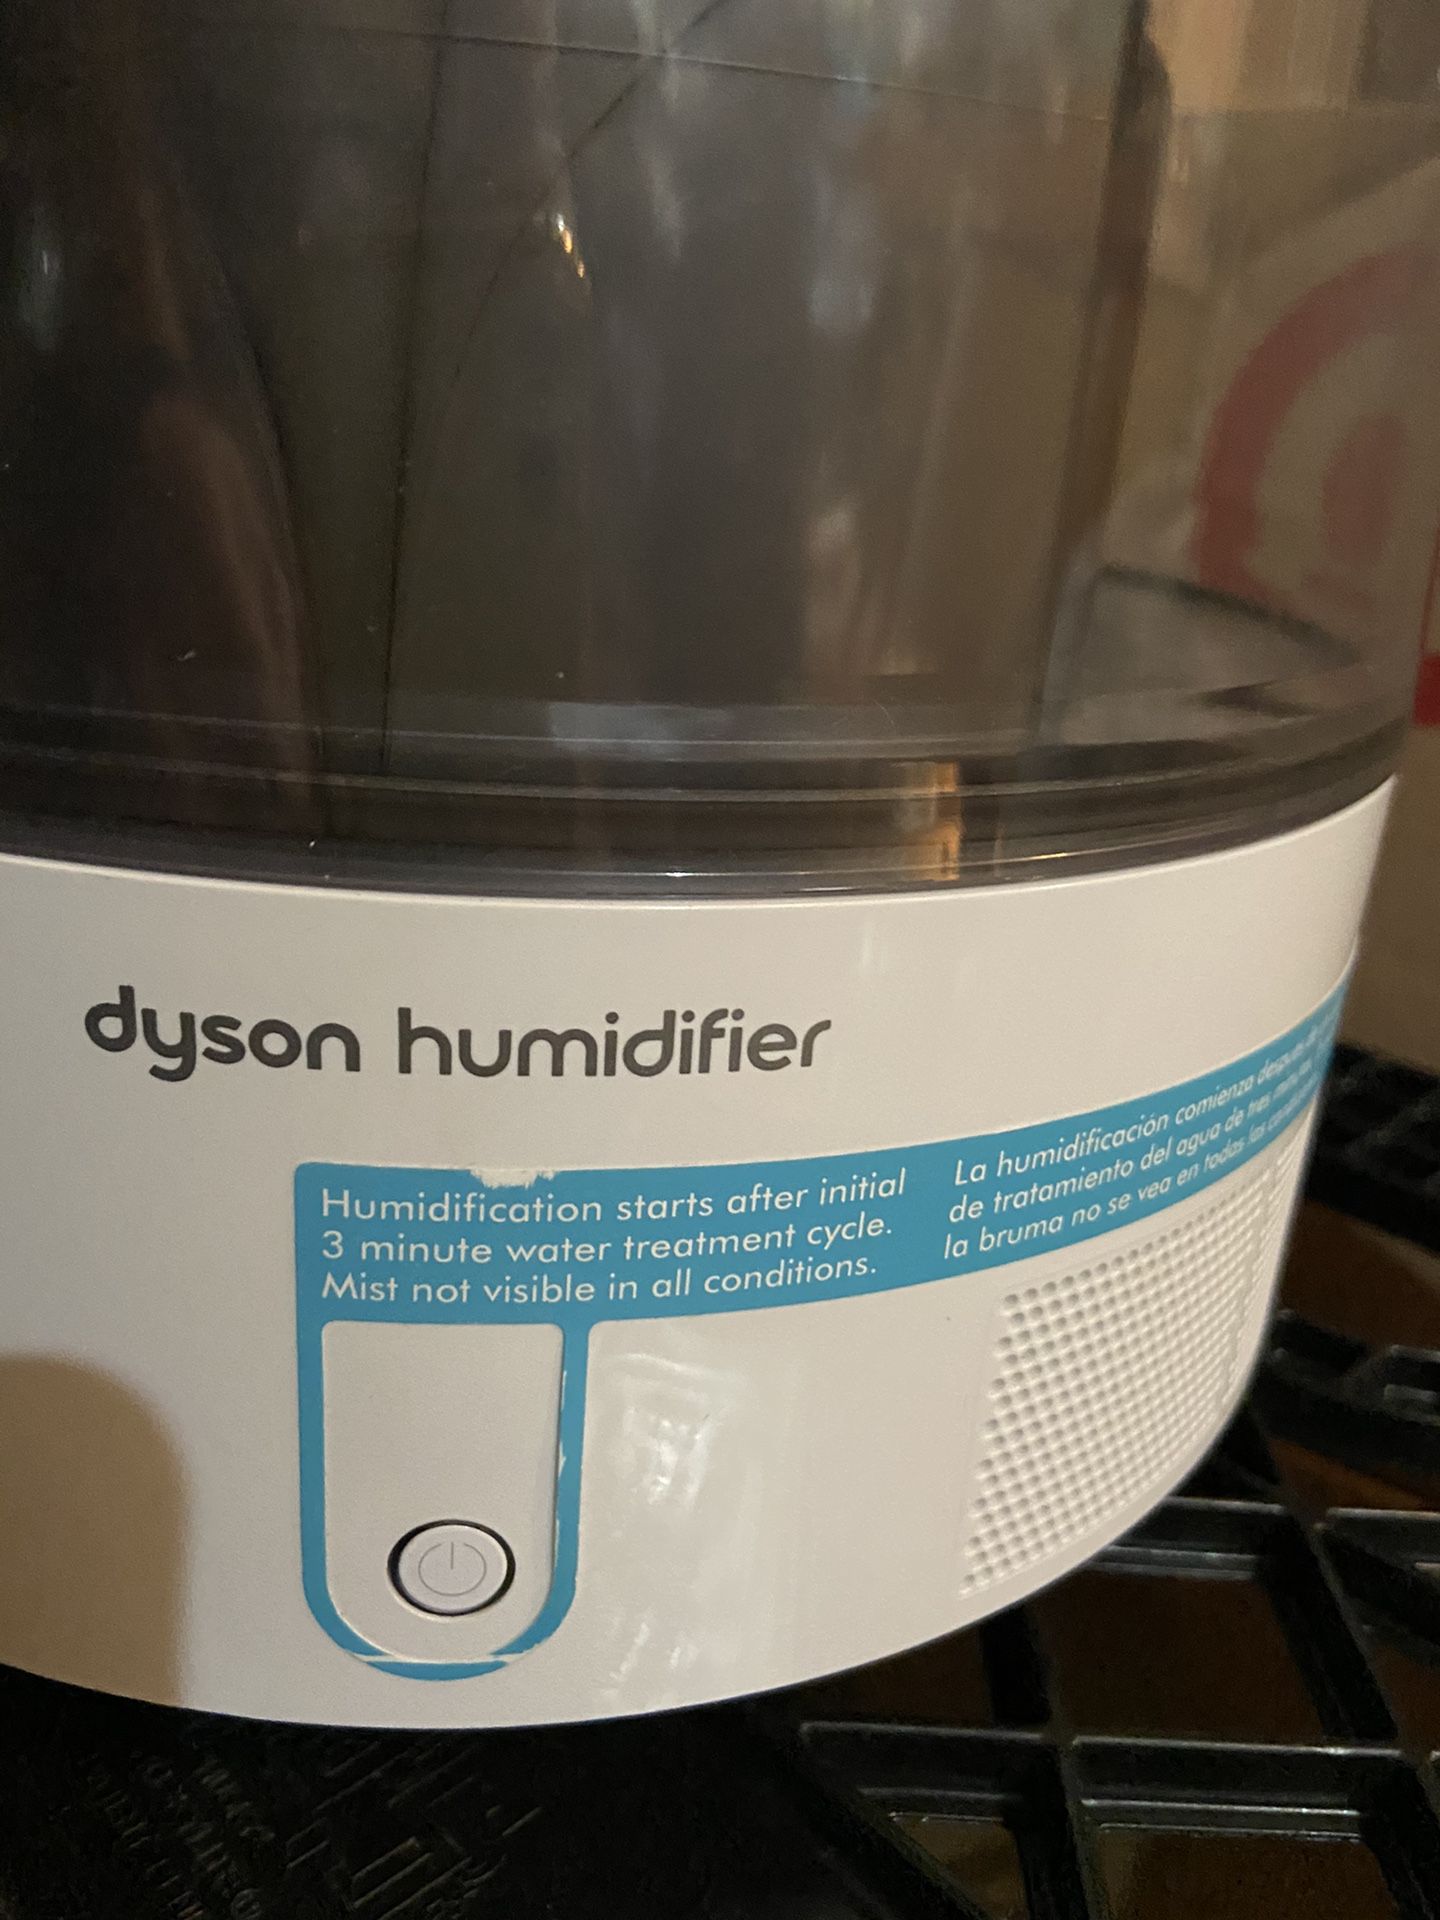 Dyson humidifier